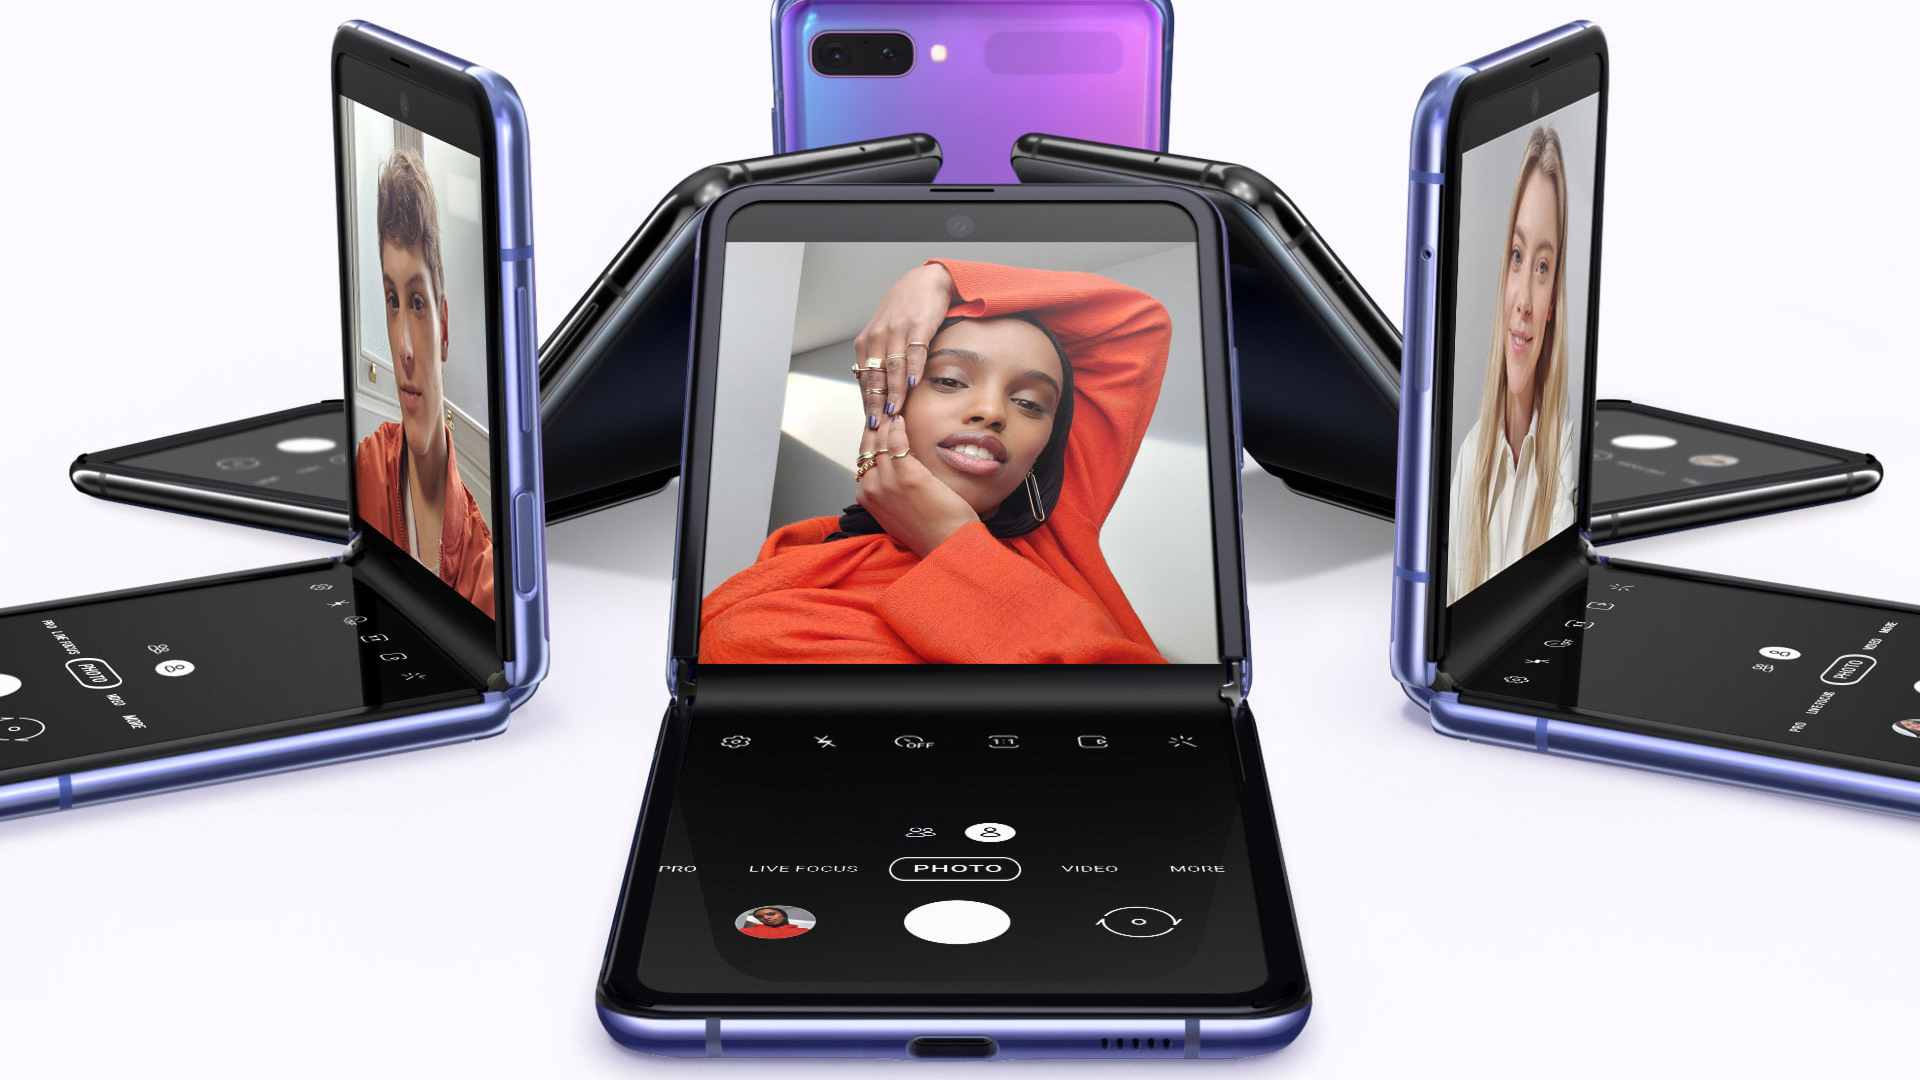 See Samsung S Foldable Galaxy Z Flip Smartphone Cnn Video